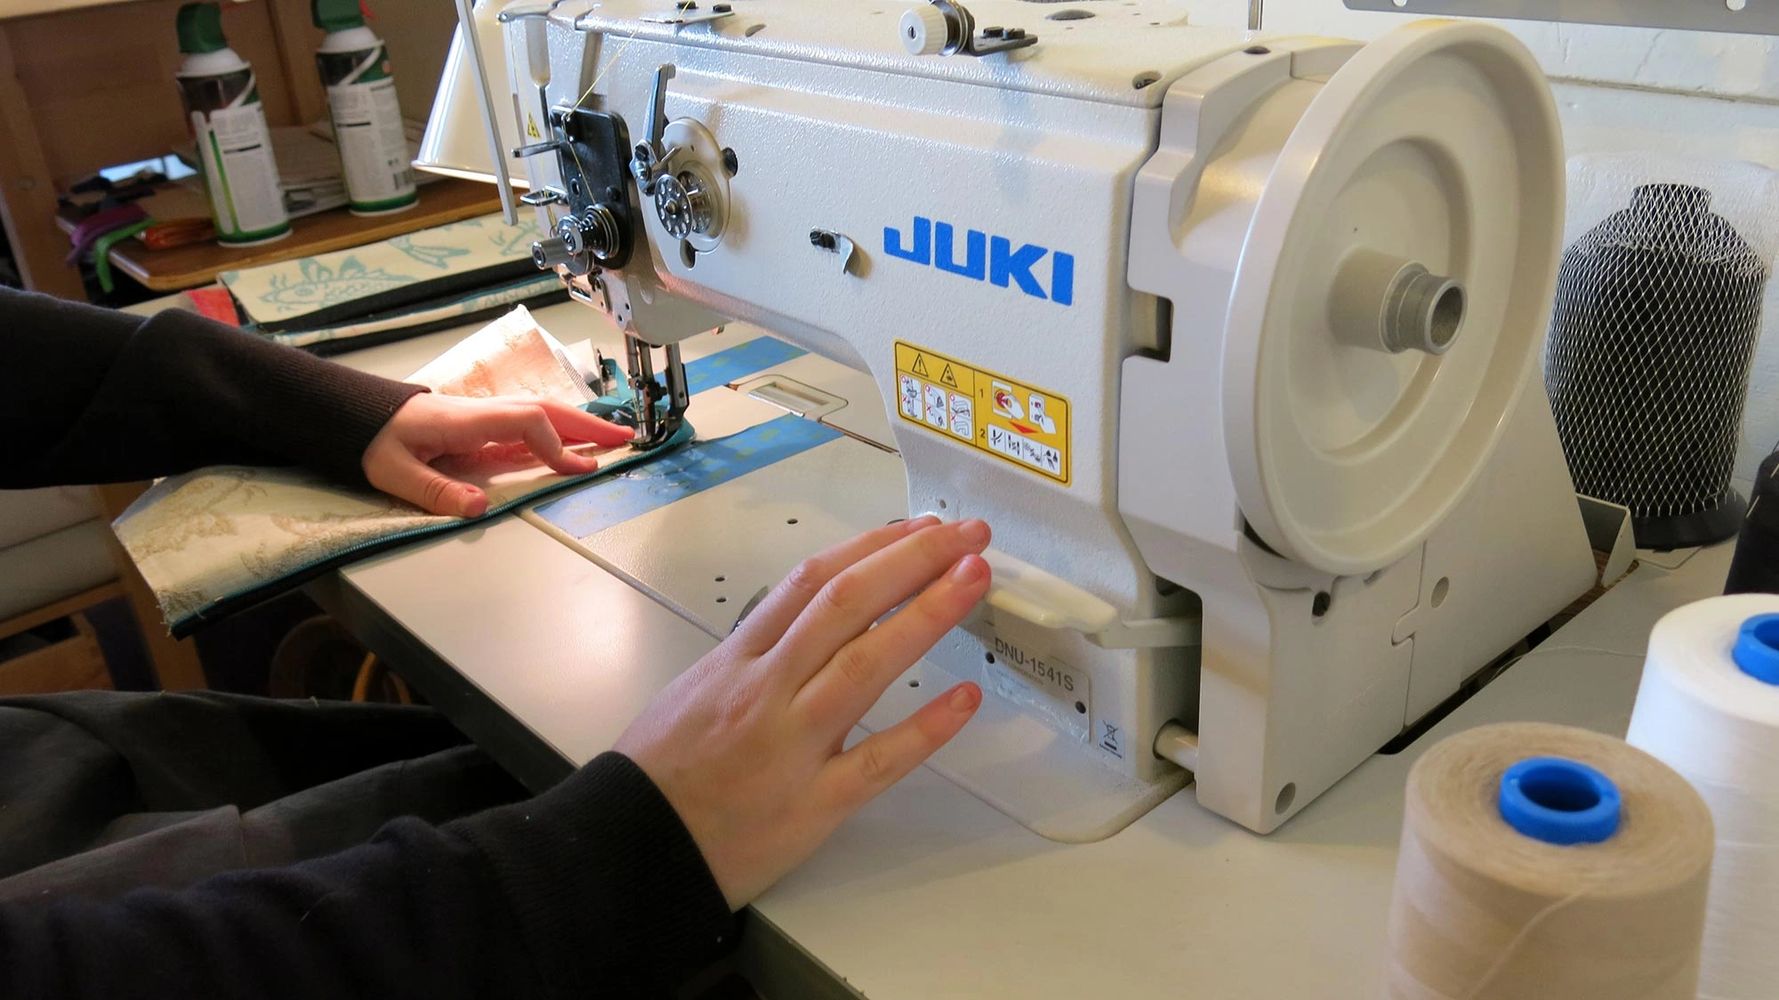 Juki Industrial sewing machine, walking foot